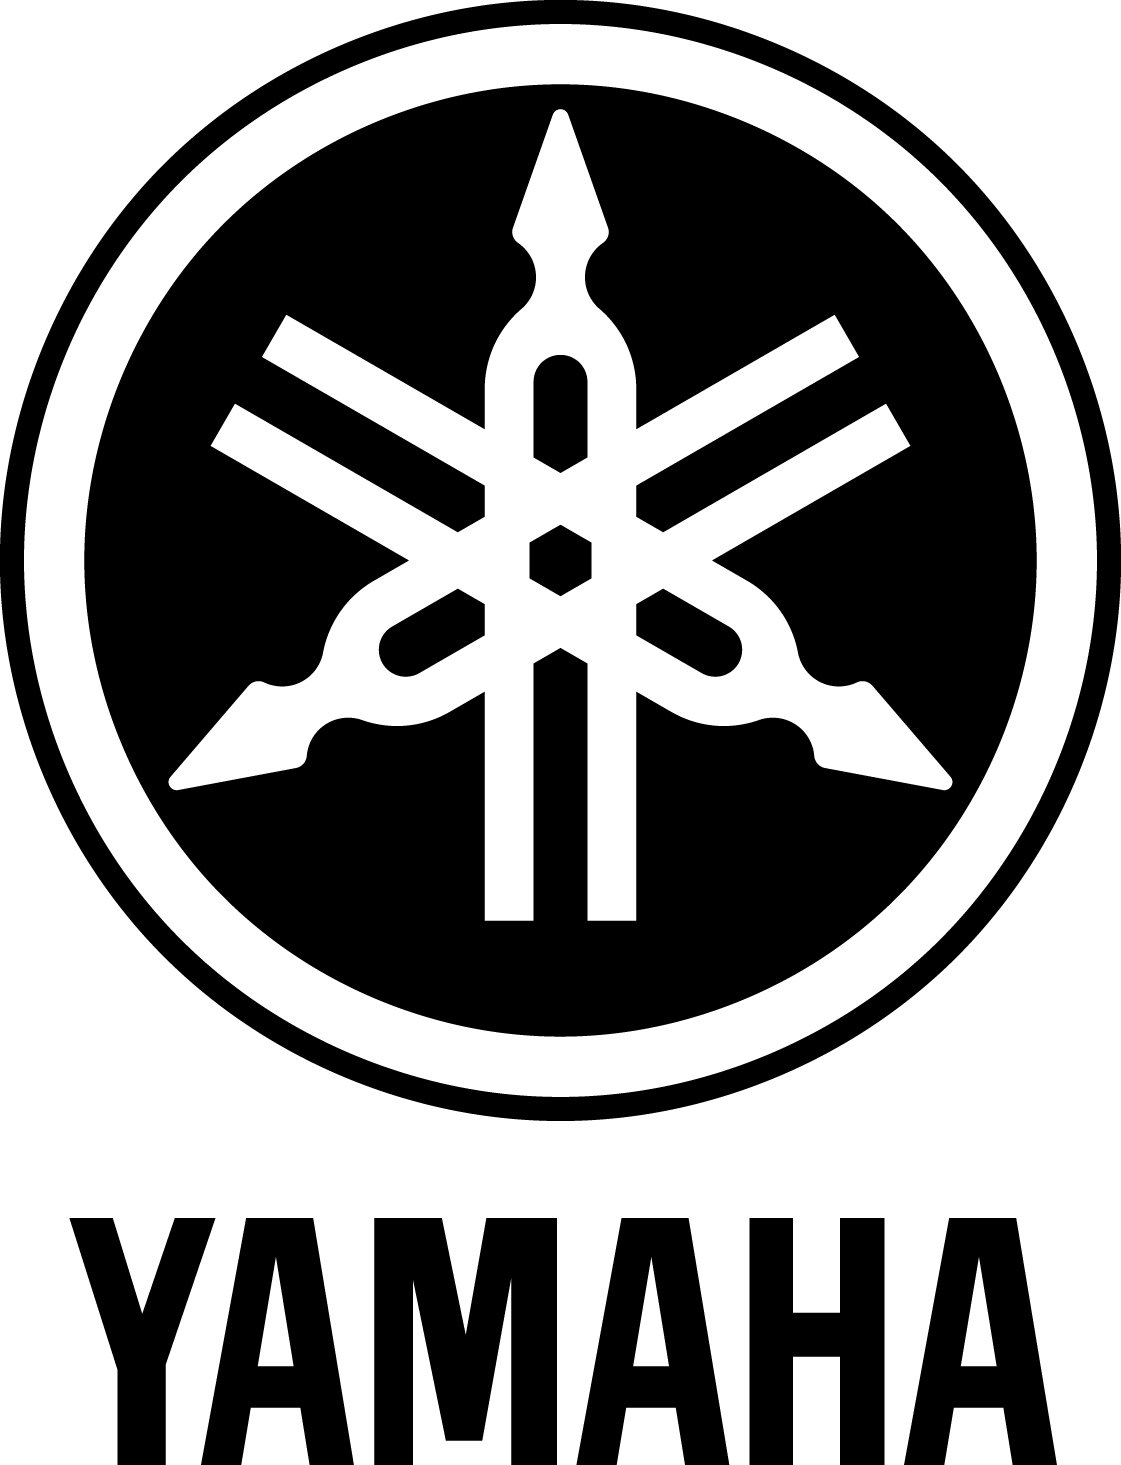 Yamaha Logo 7230 Hd Wallpapers in Logos   Imagescicom 1121x1465